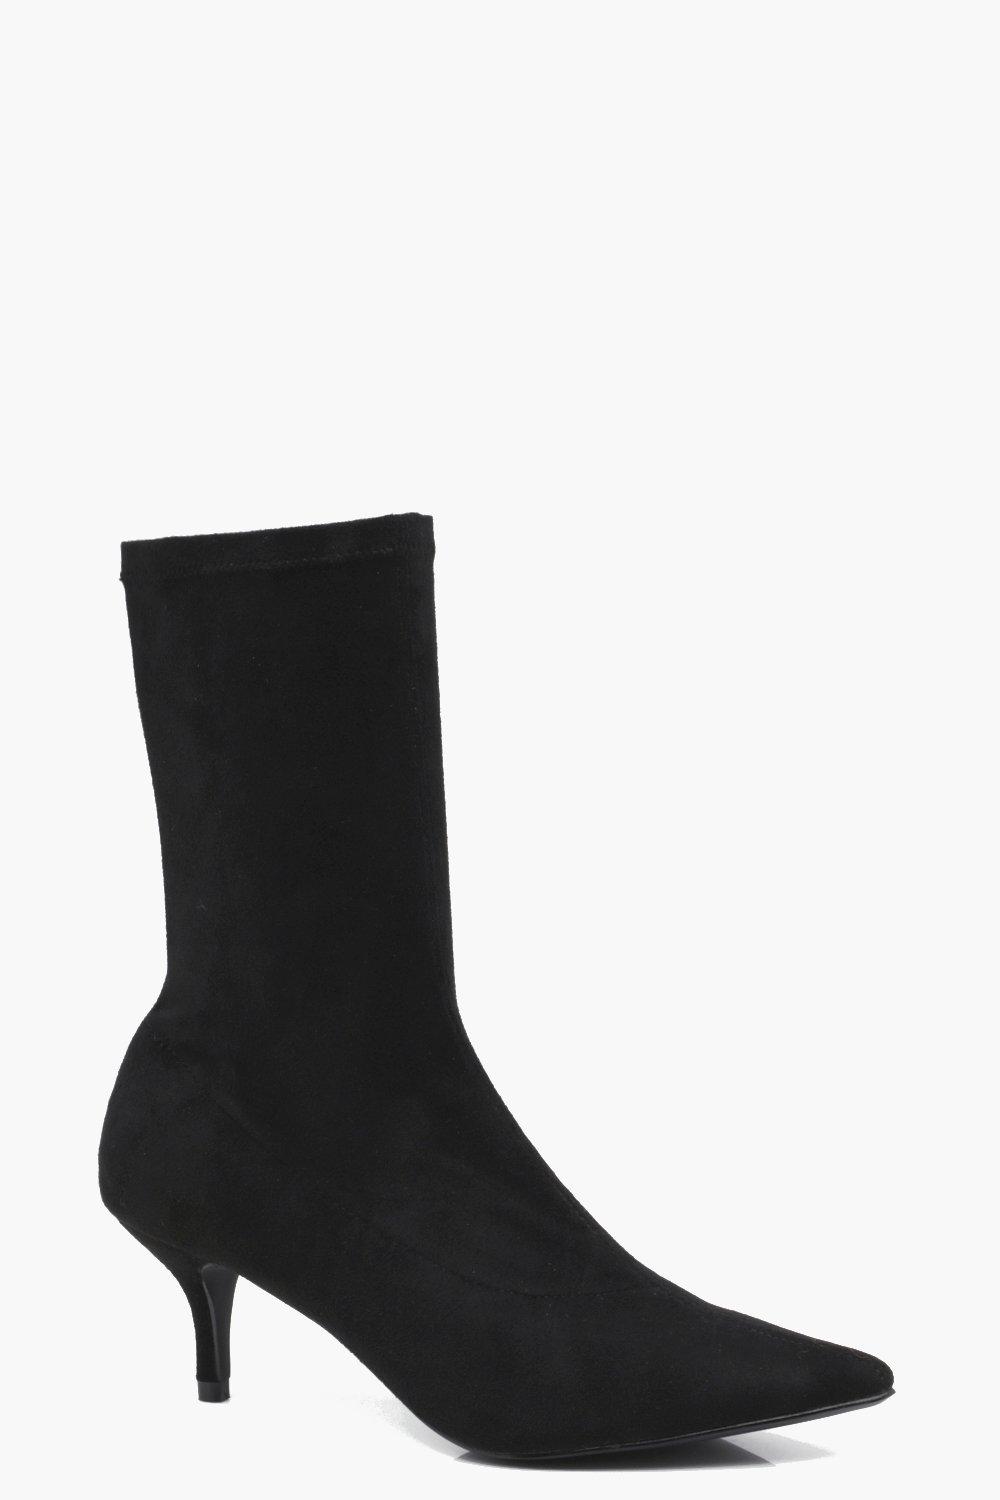 black kitten heel sock boot